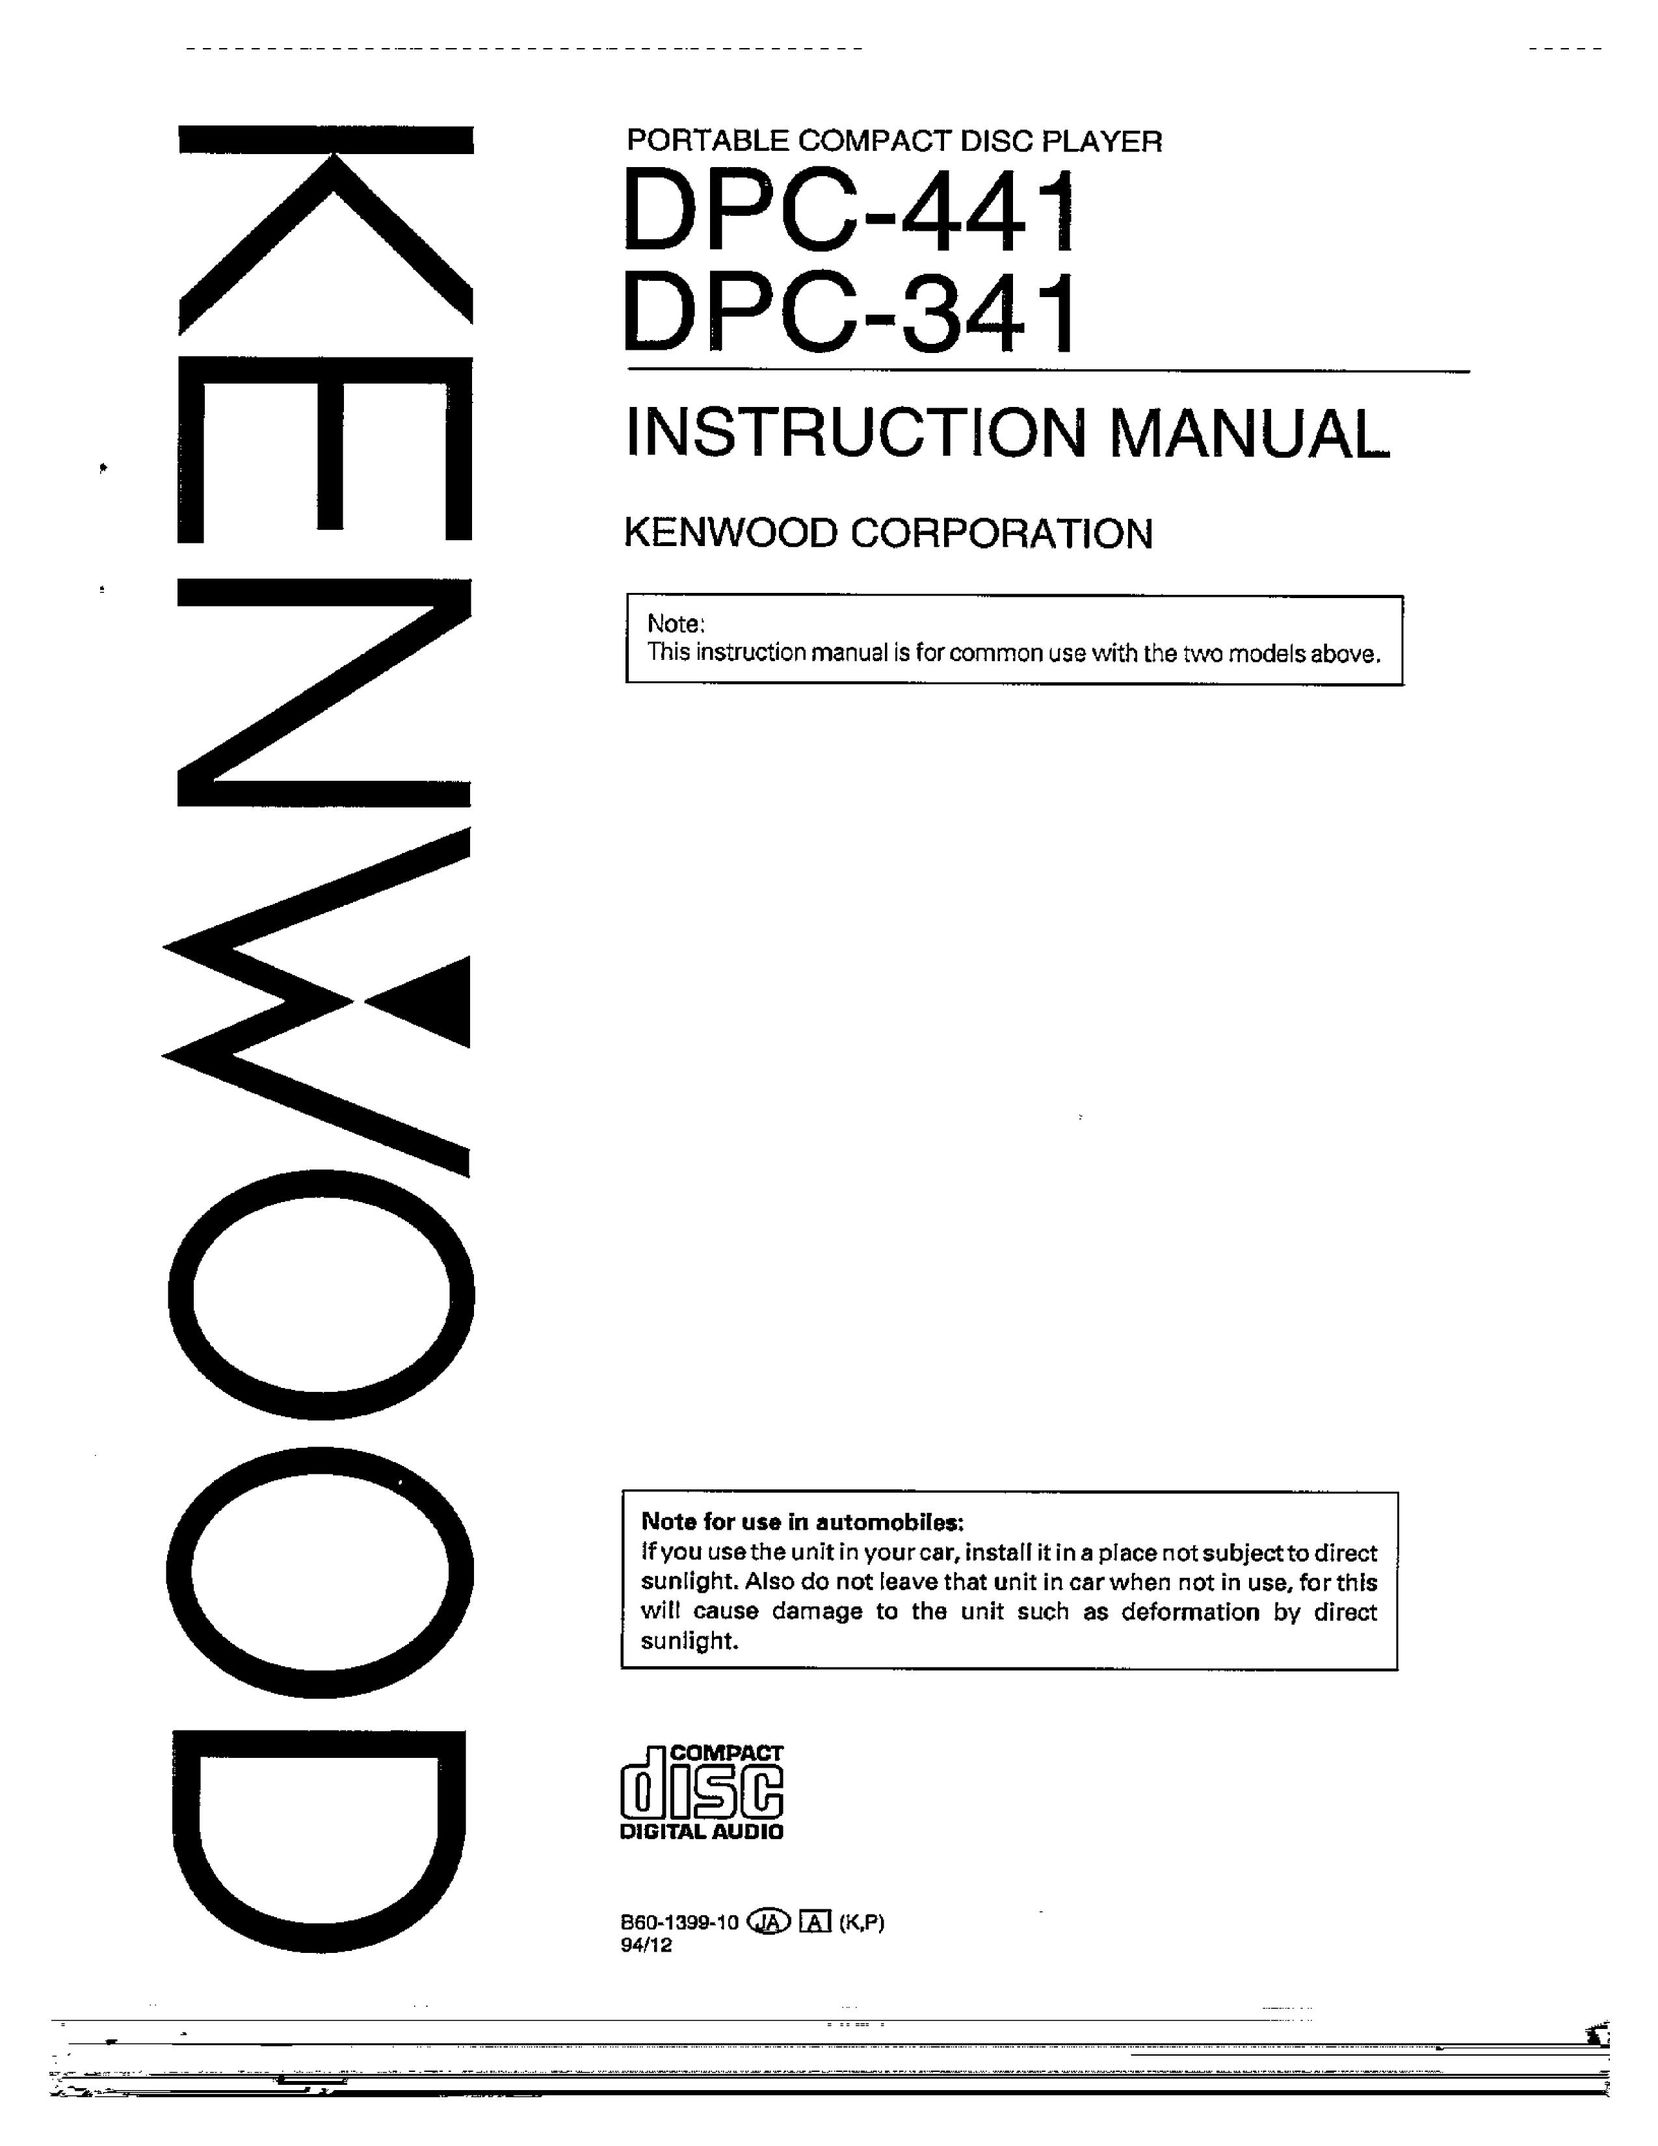 Kenwood DPC-441 CD Player User Manual